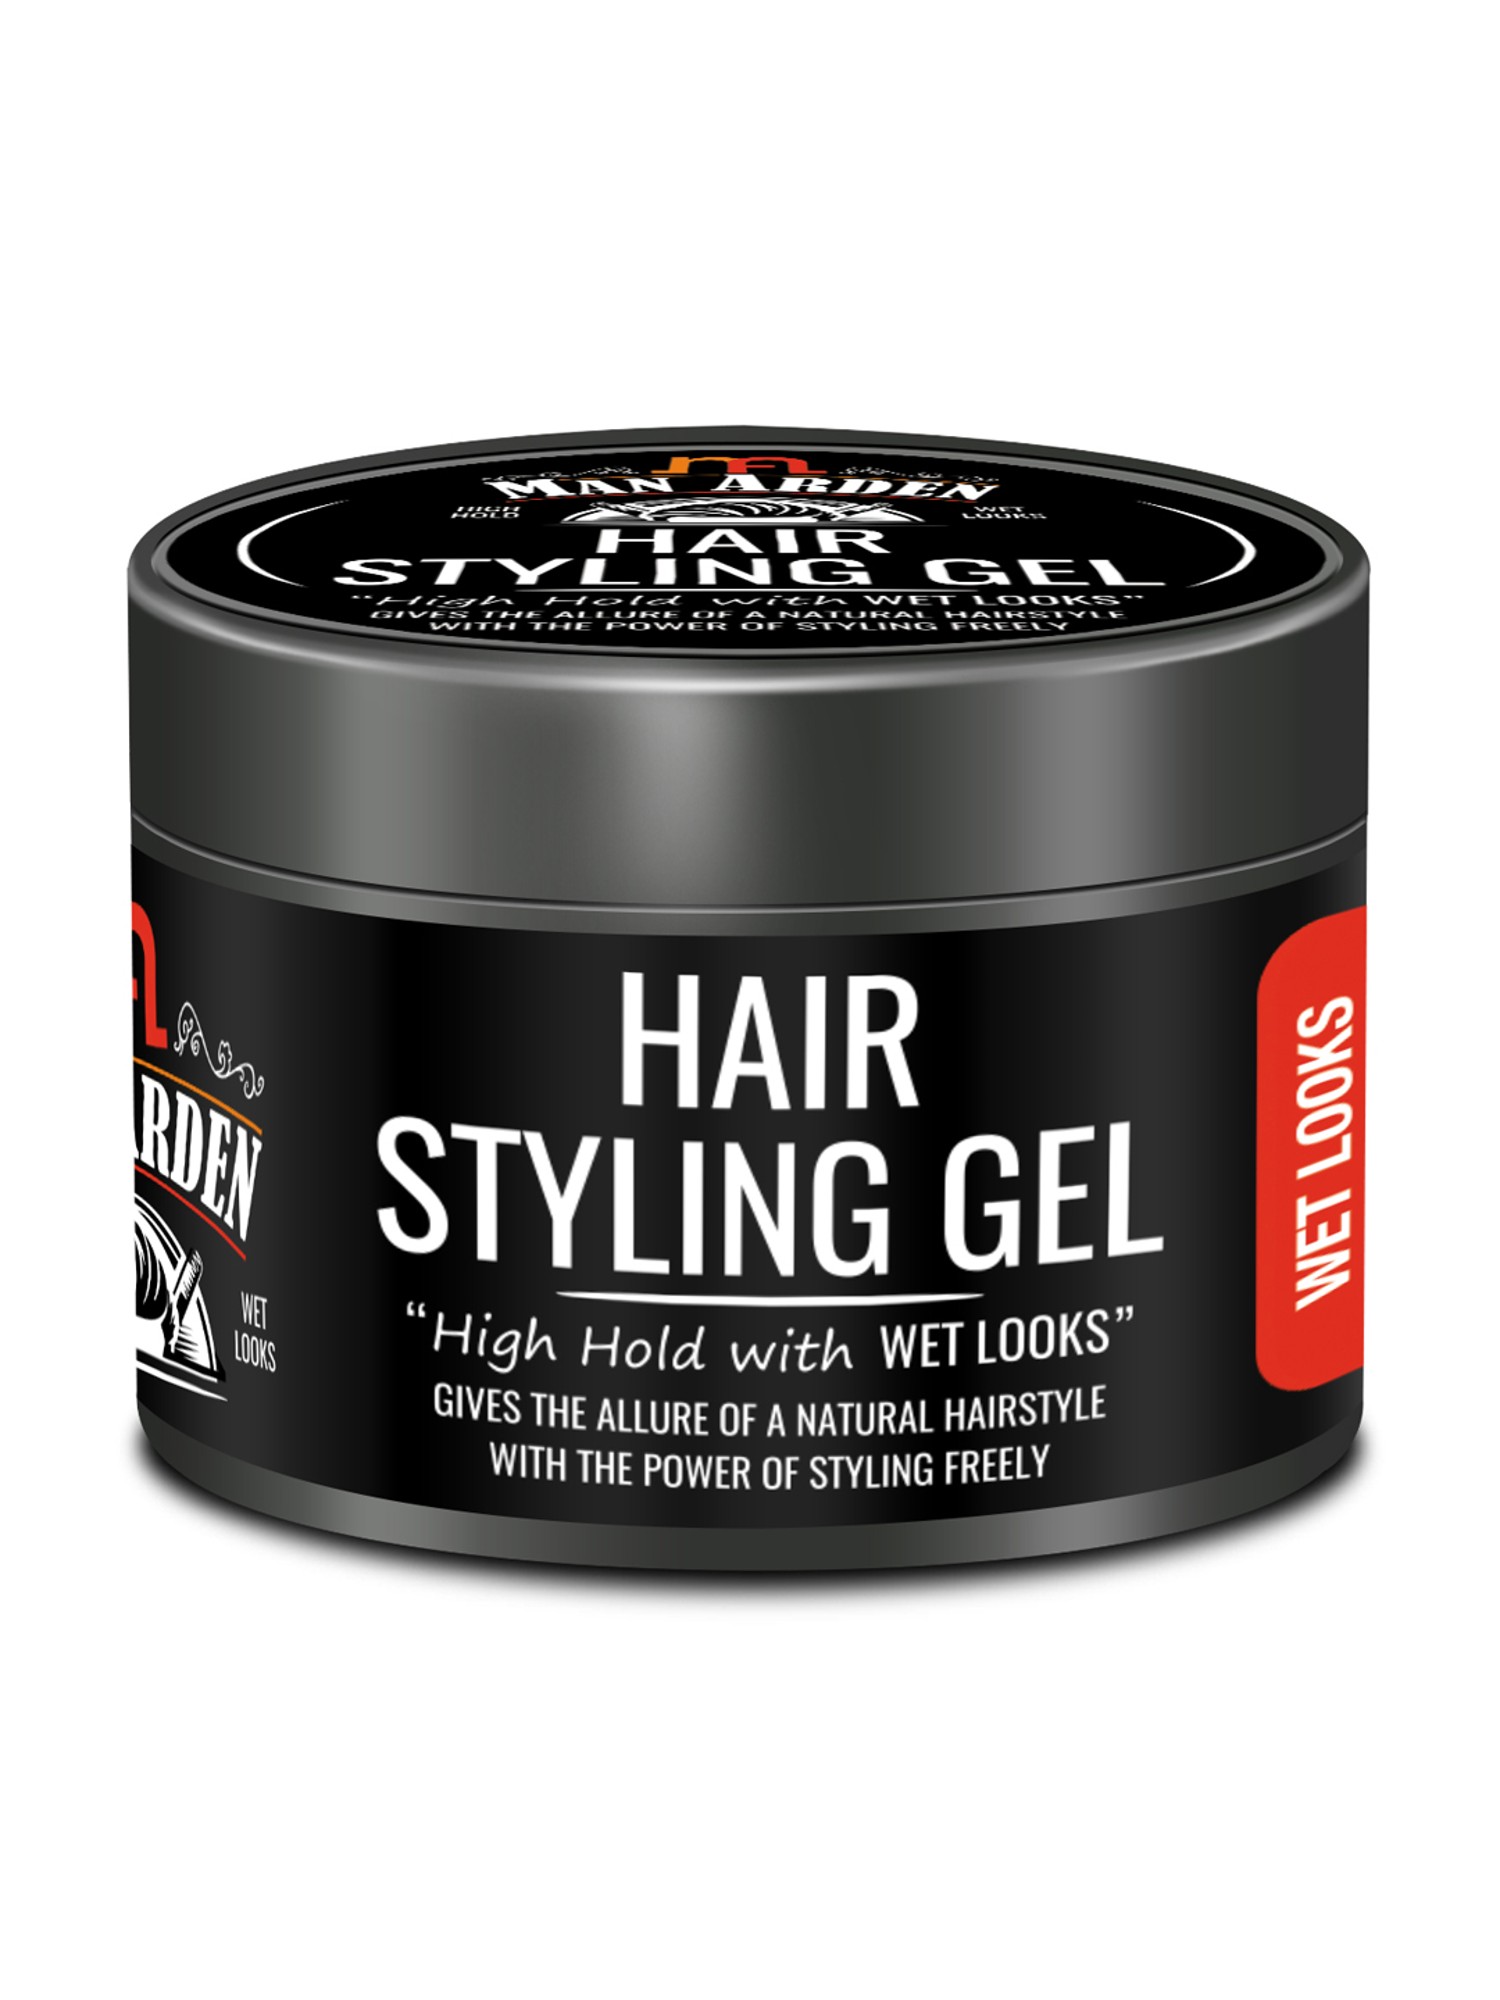 Set Wet Cool Hold Hair Gel (250ml Jar) – CyberKart